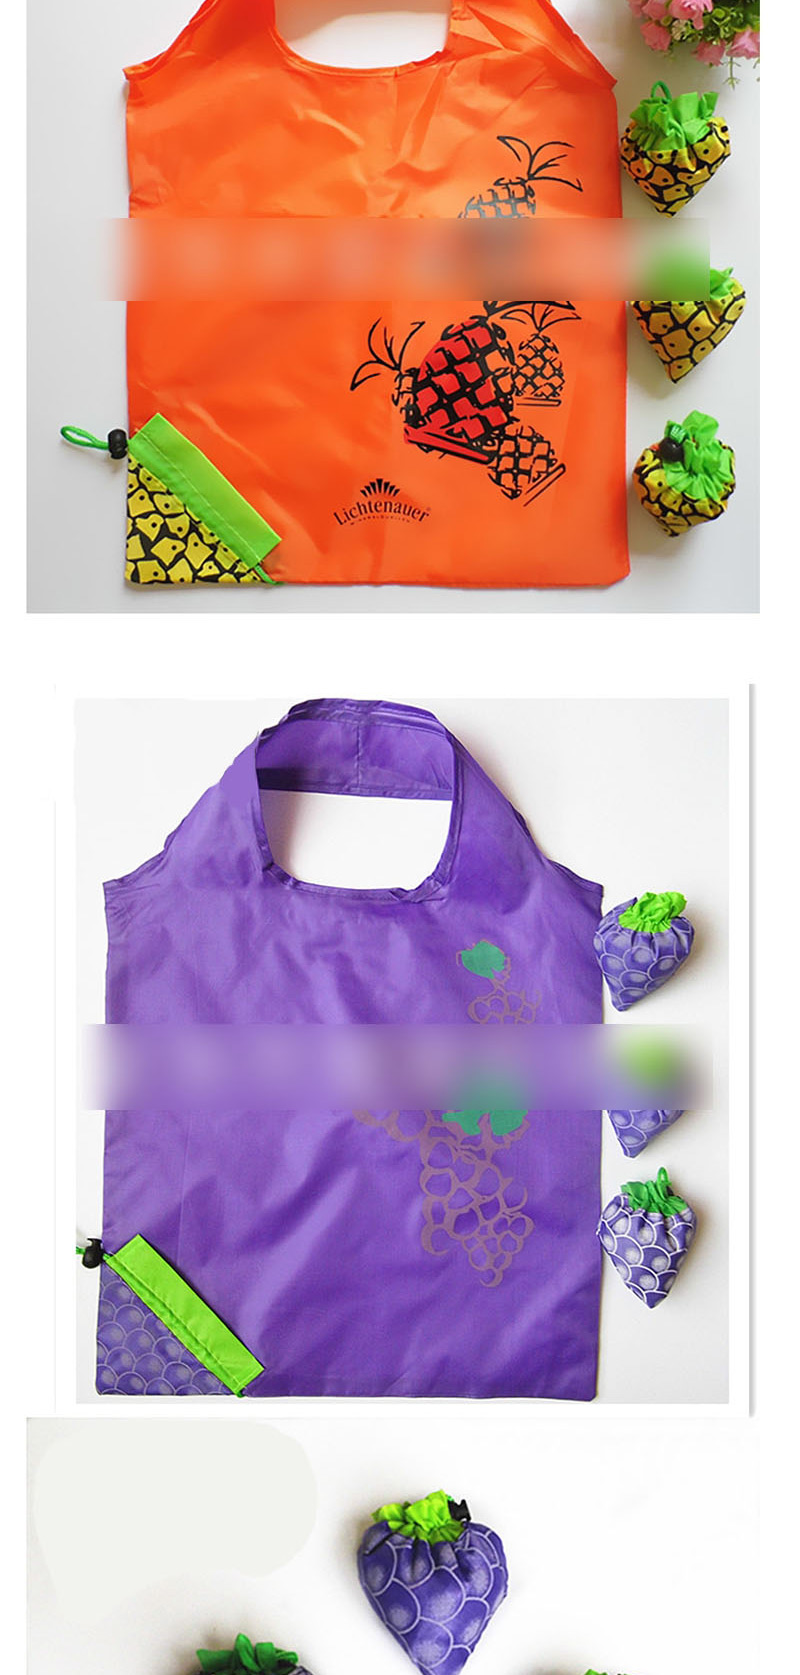 Fashion Red Apple Polyester Folded Fruit Green Bag Shopping Bag,Handbags